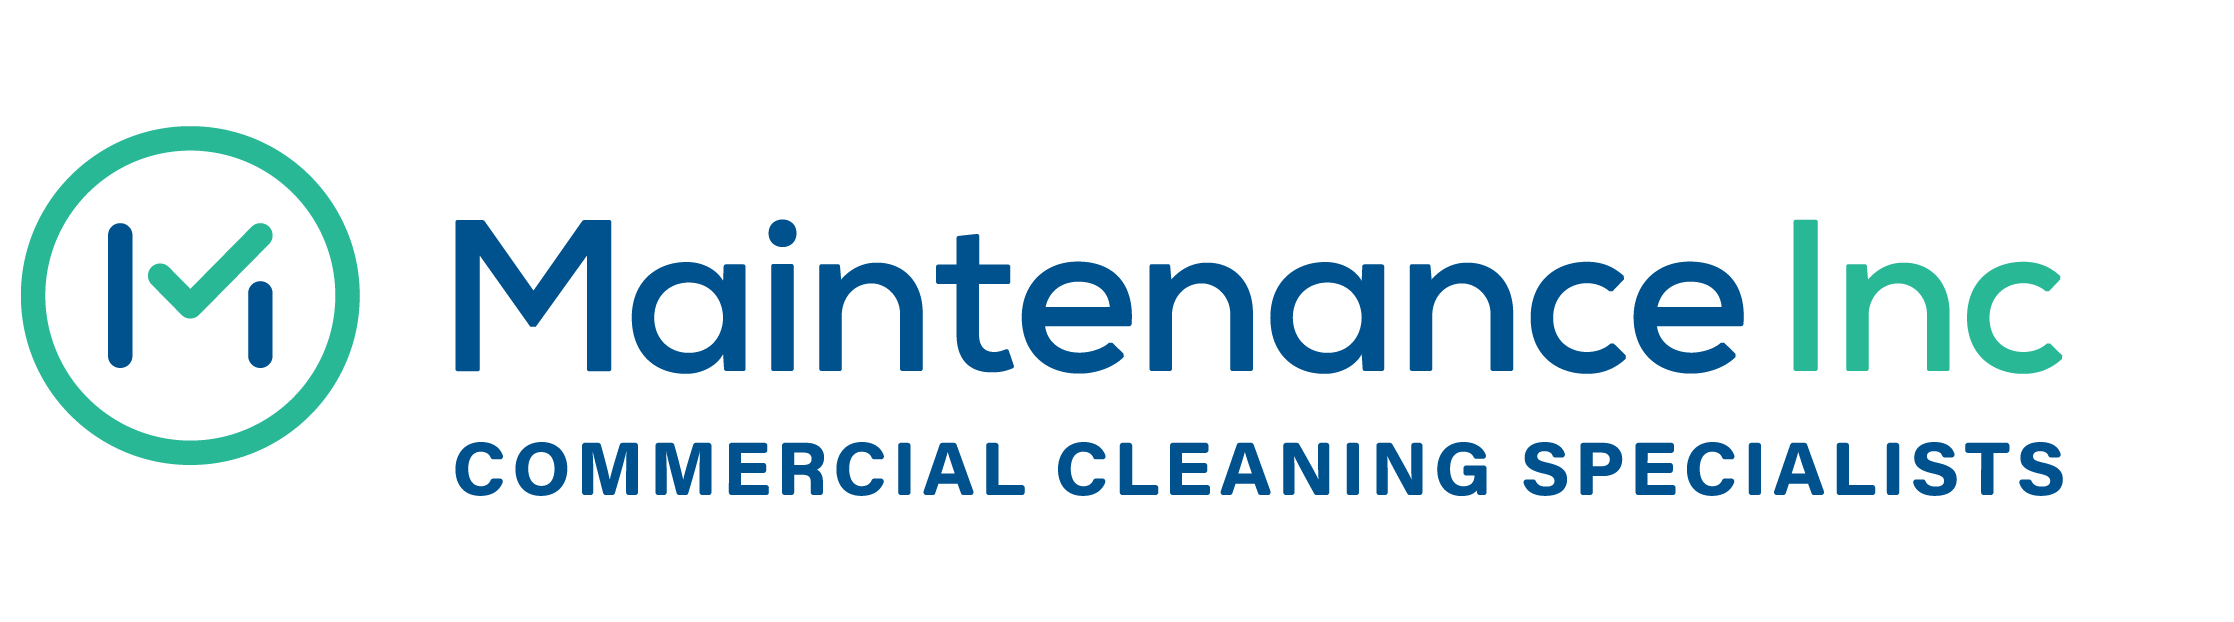 Maintenance, Inc.